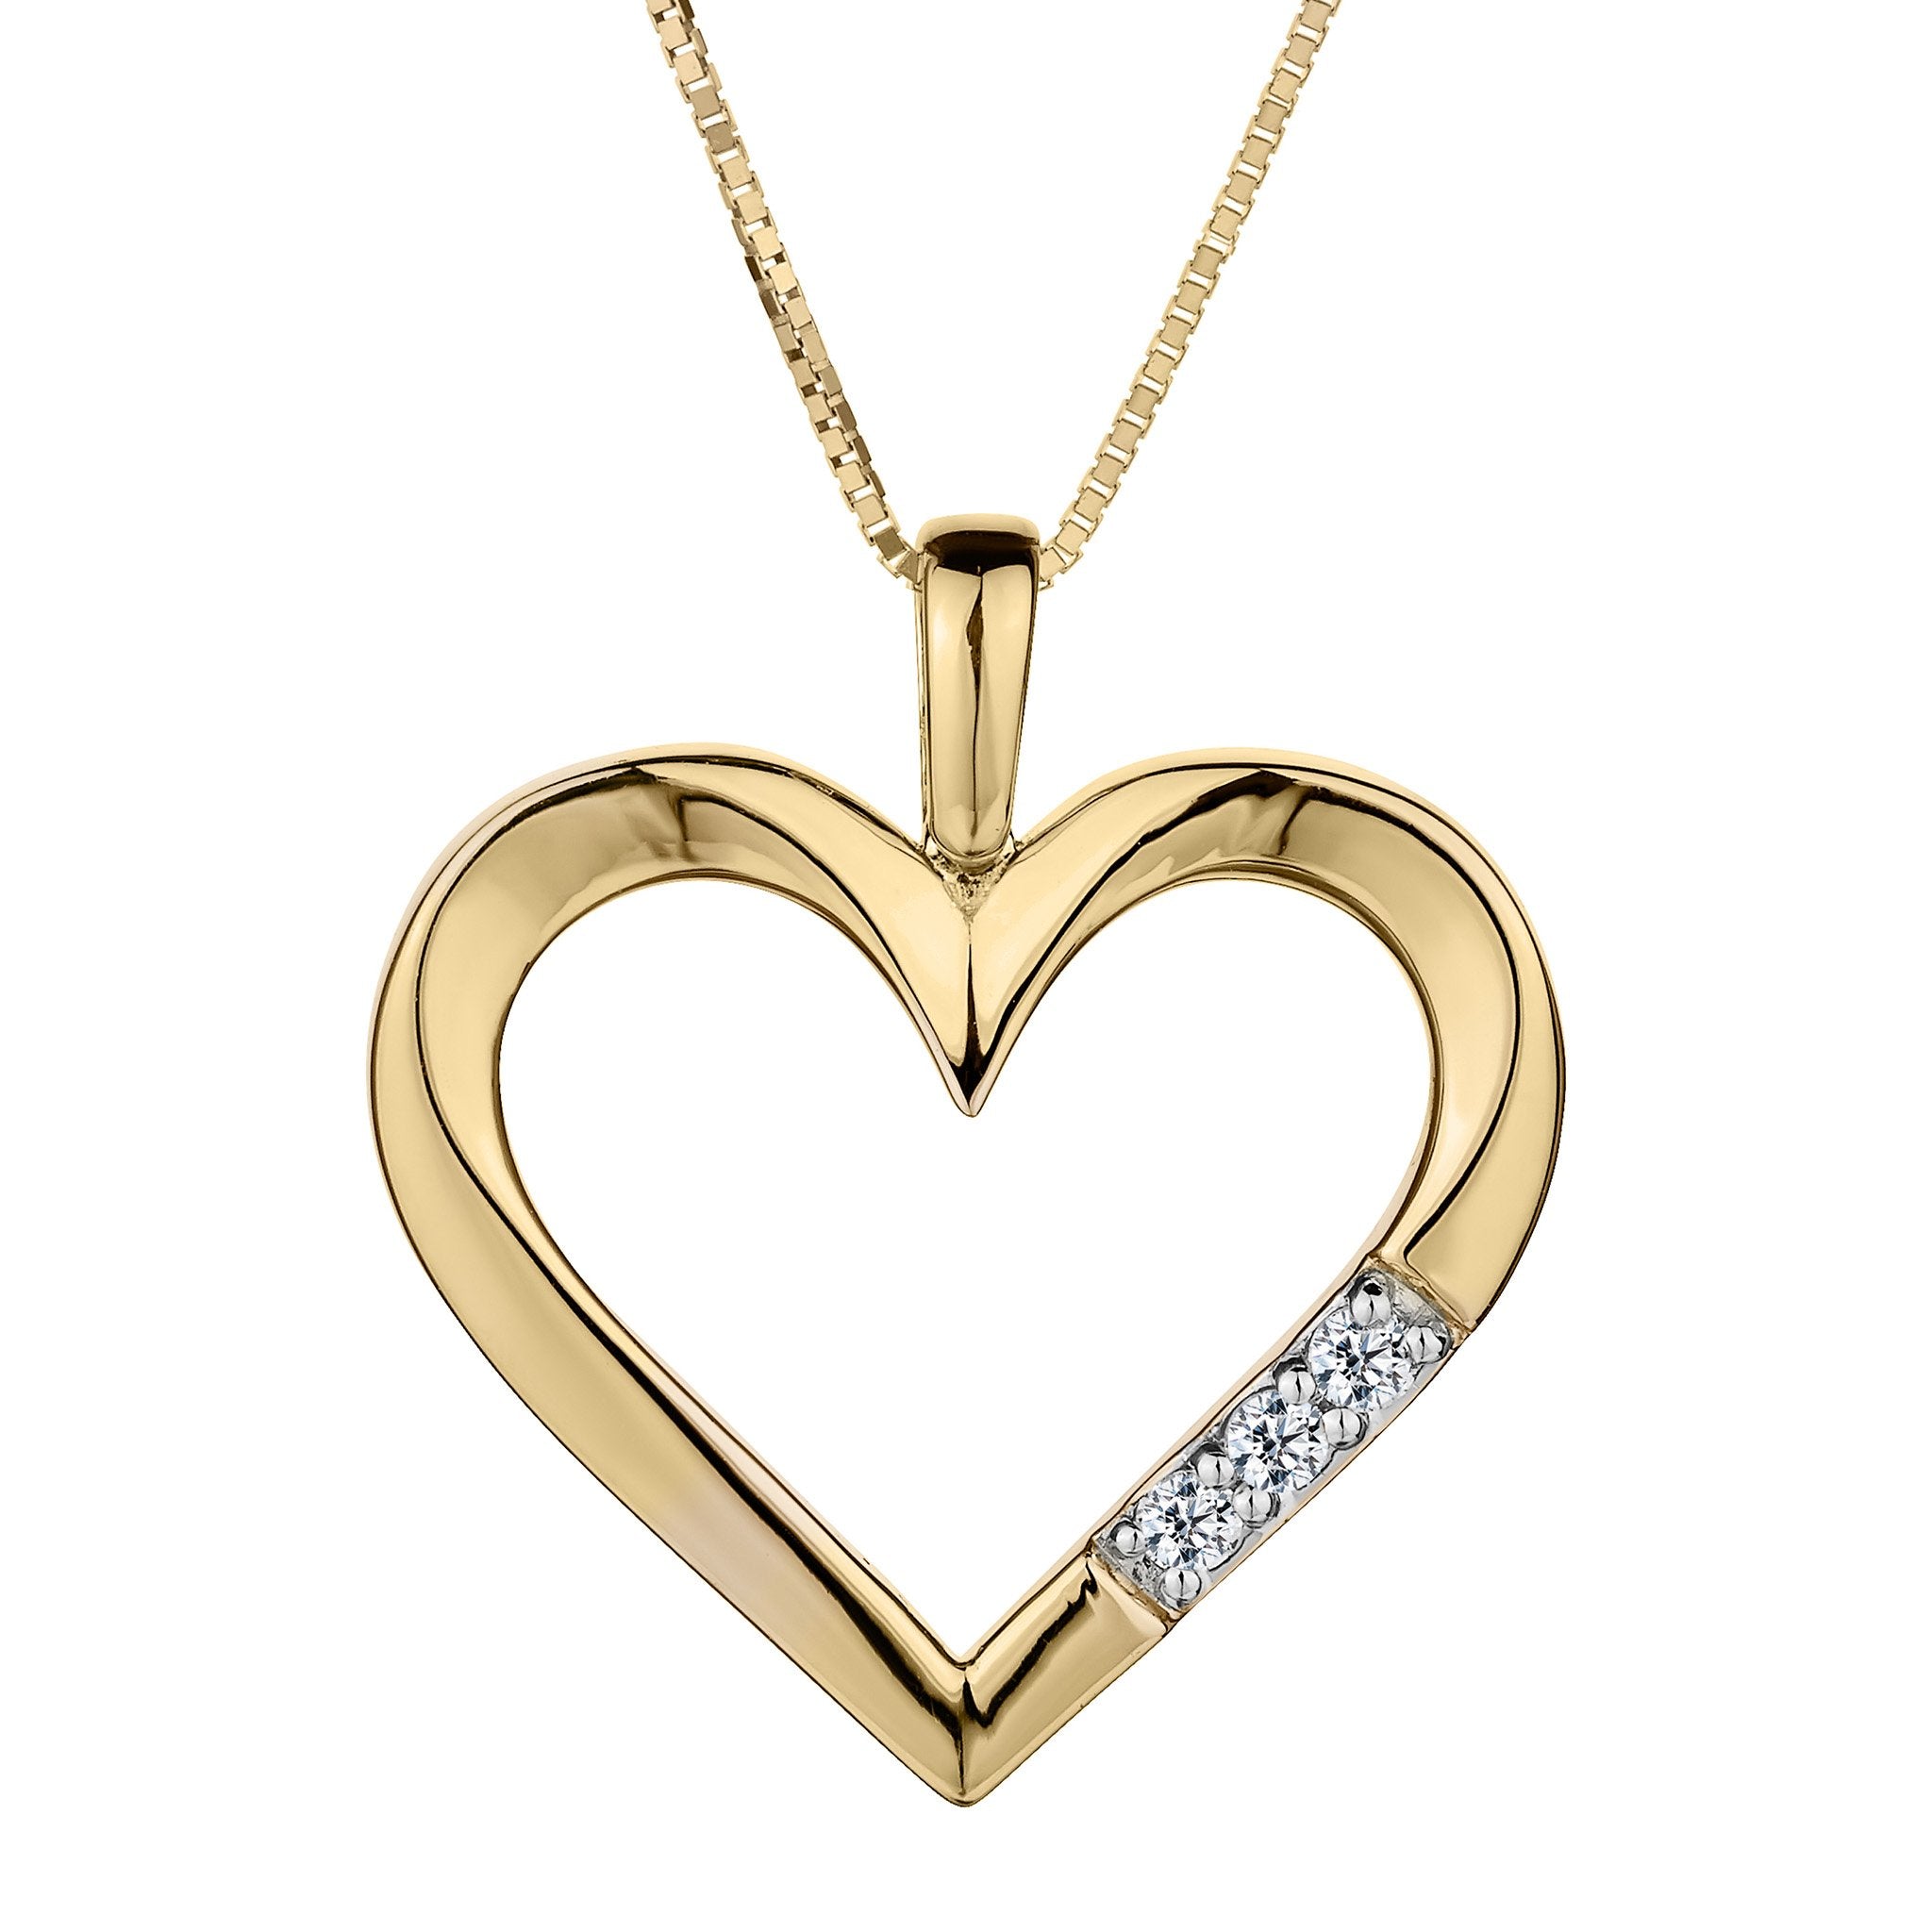 .05 Carat Diamond "Past, Present, Future" Heart Pendant,  10kt Yellow Gold....................NOW